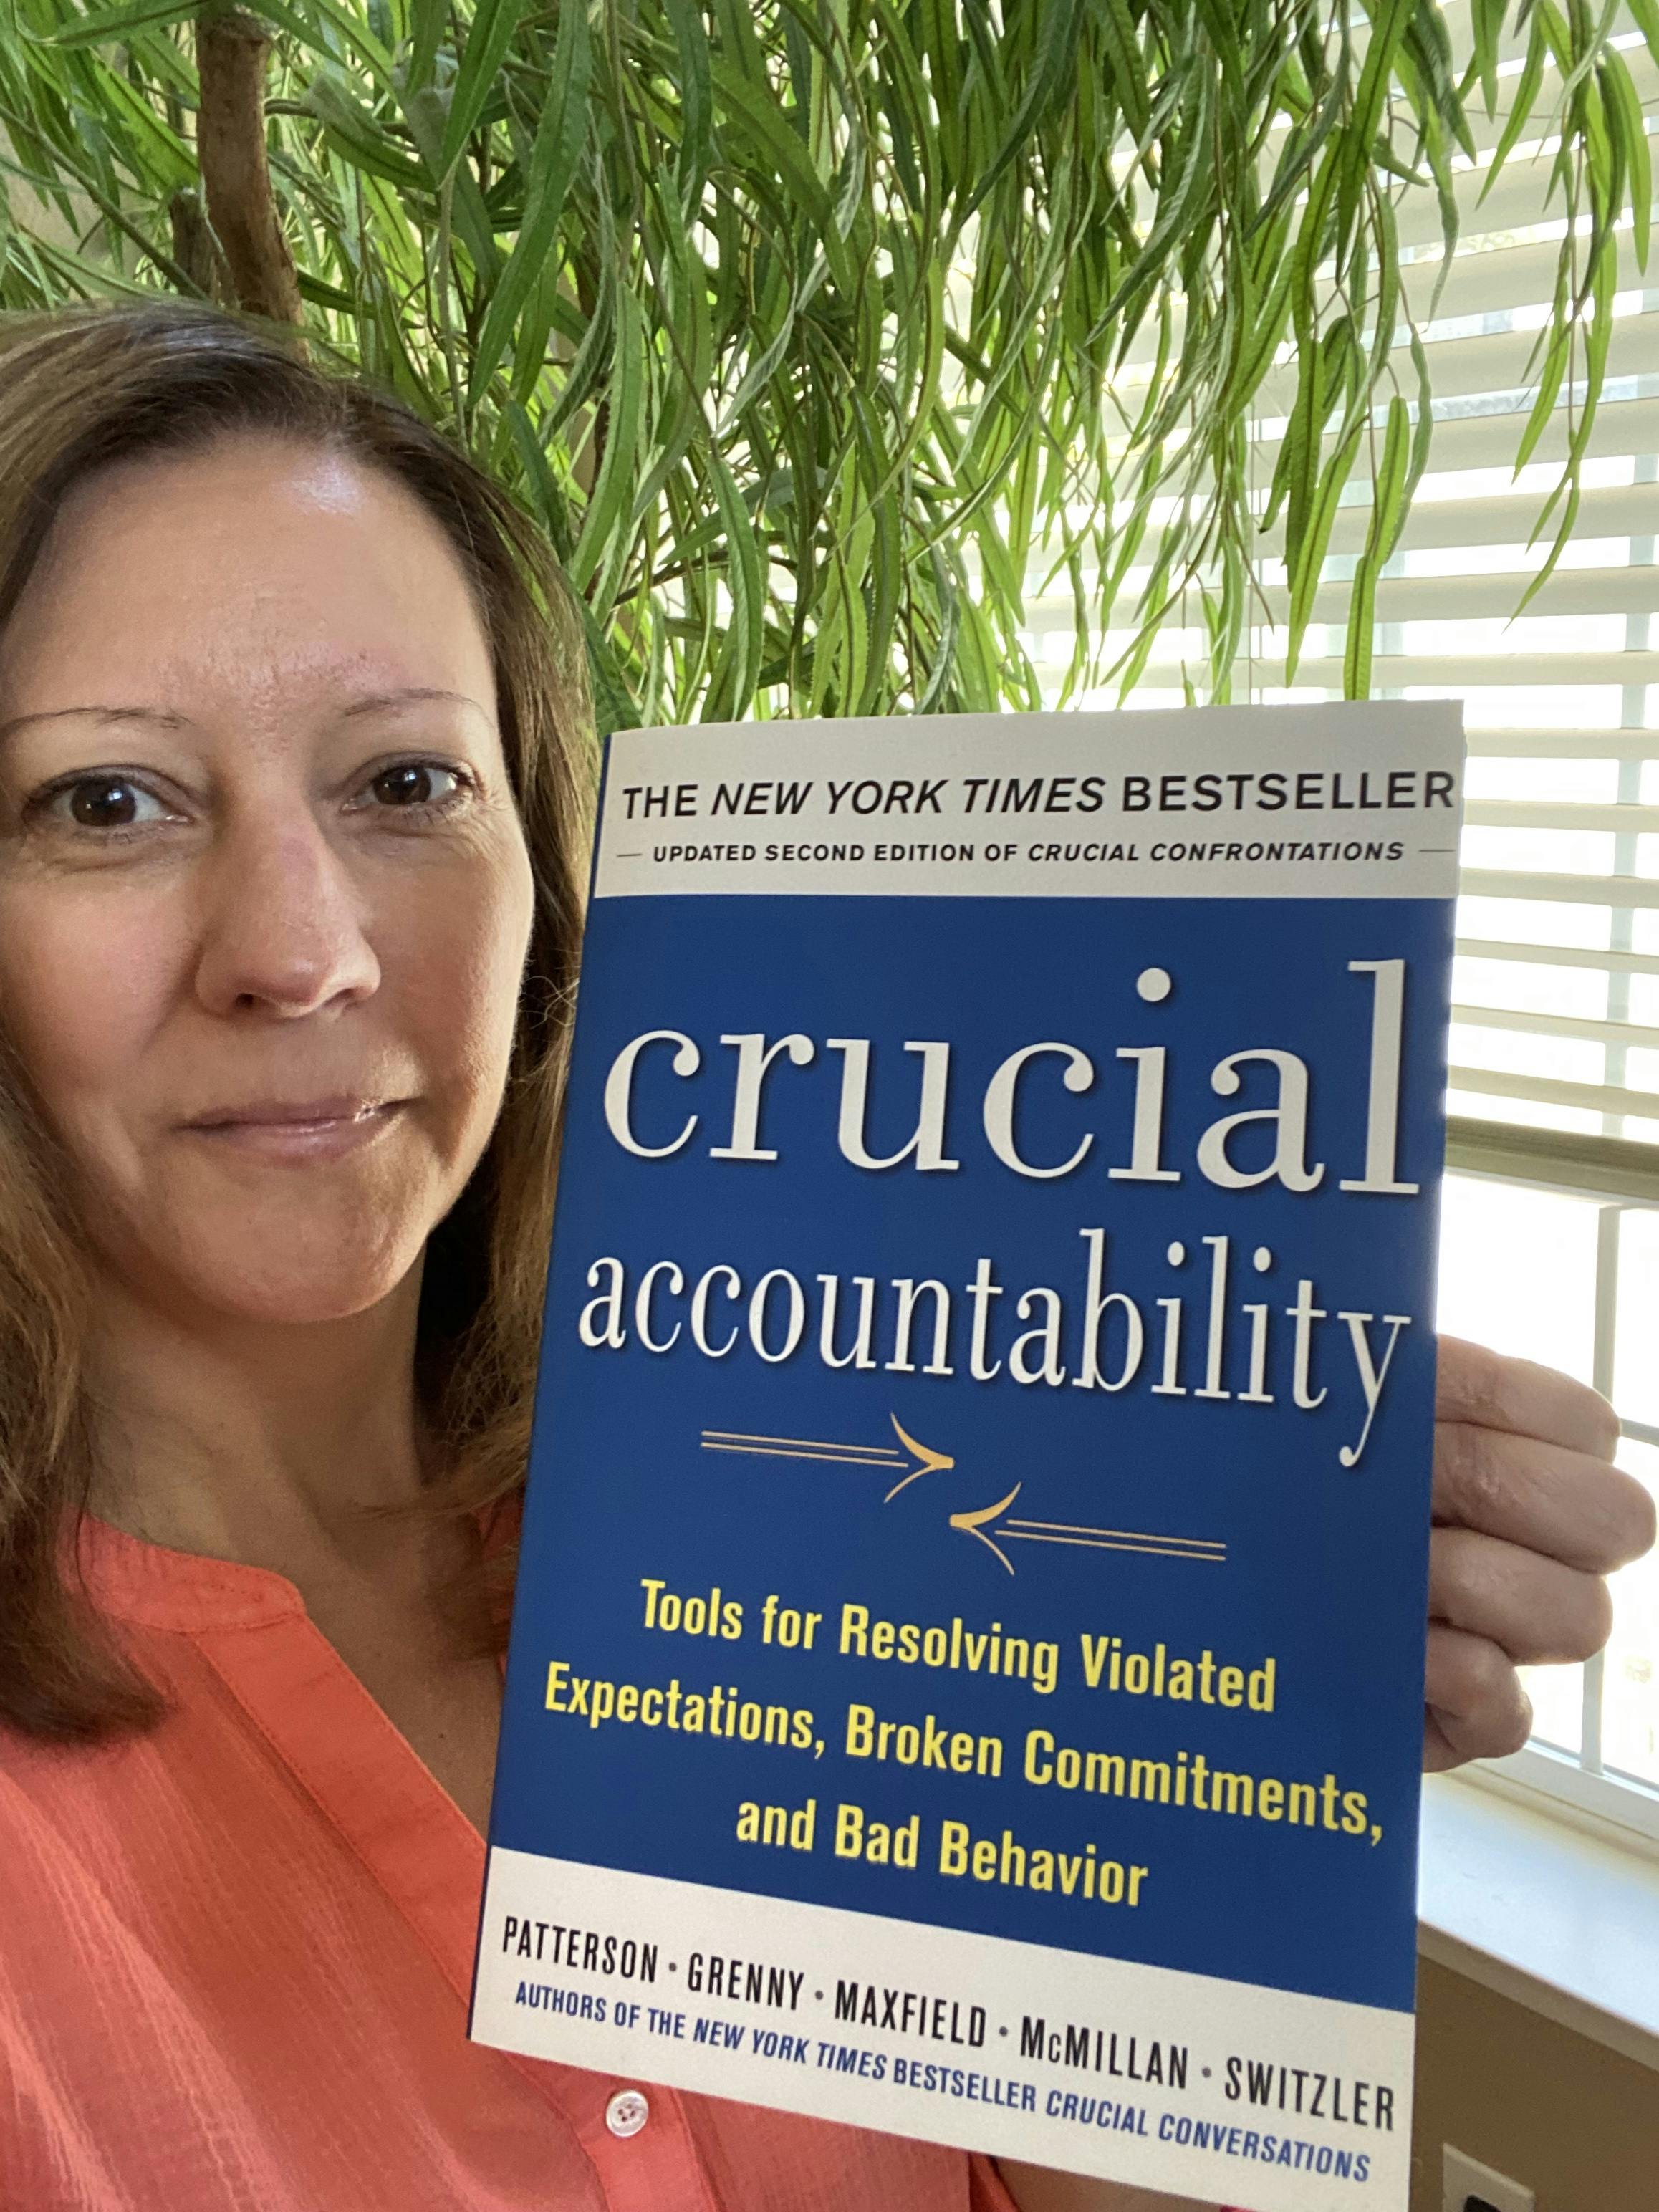 Stephanie holding up the book "Crucial Accountability"